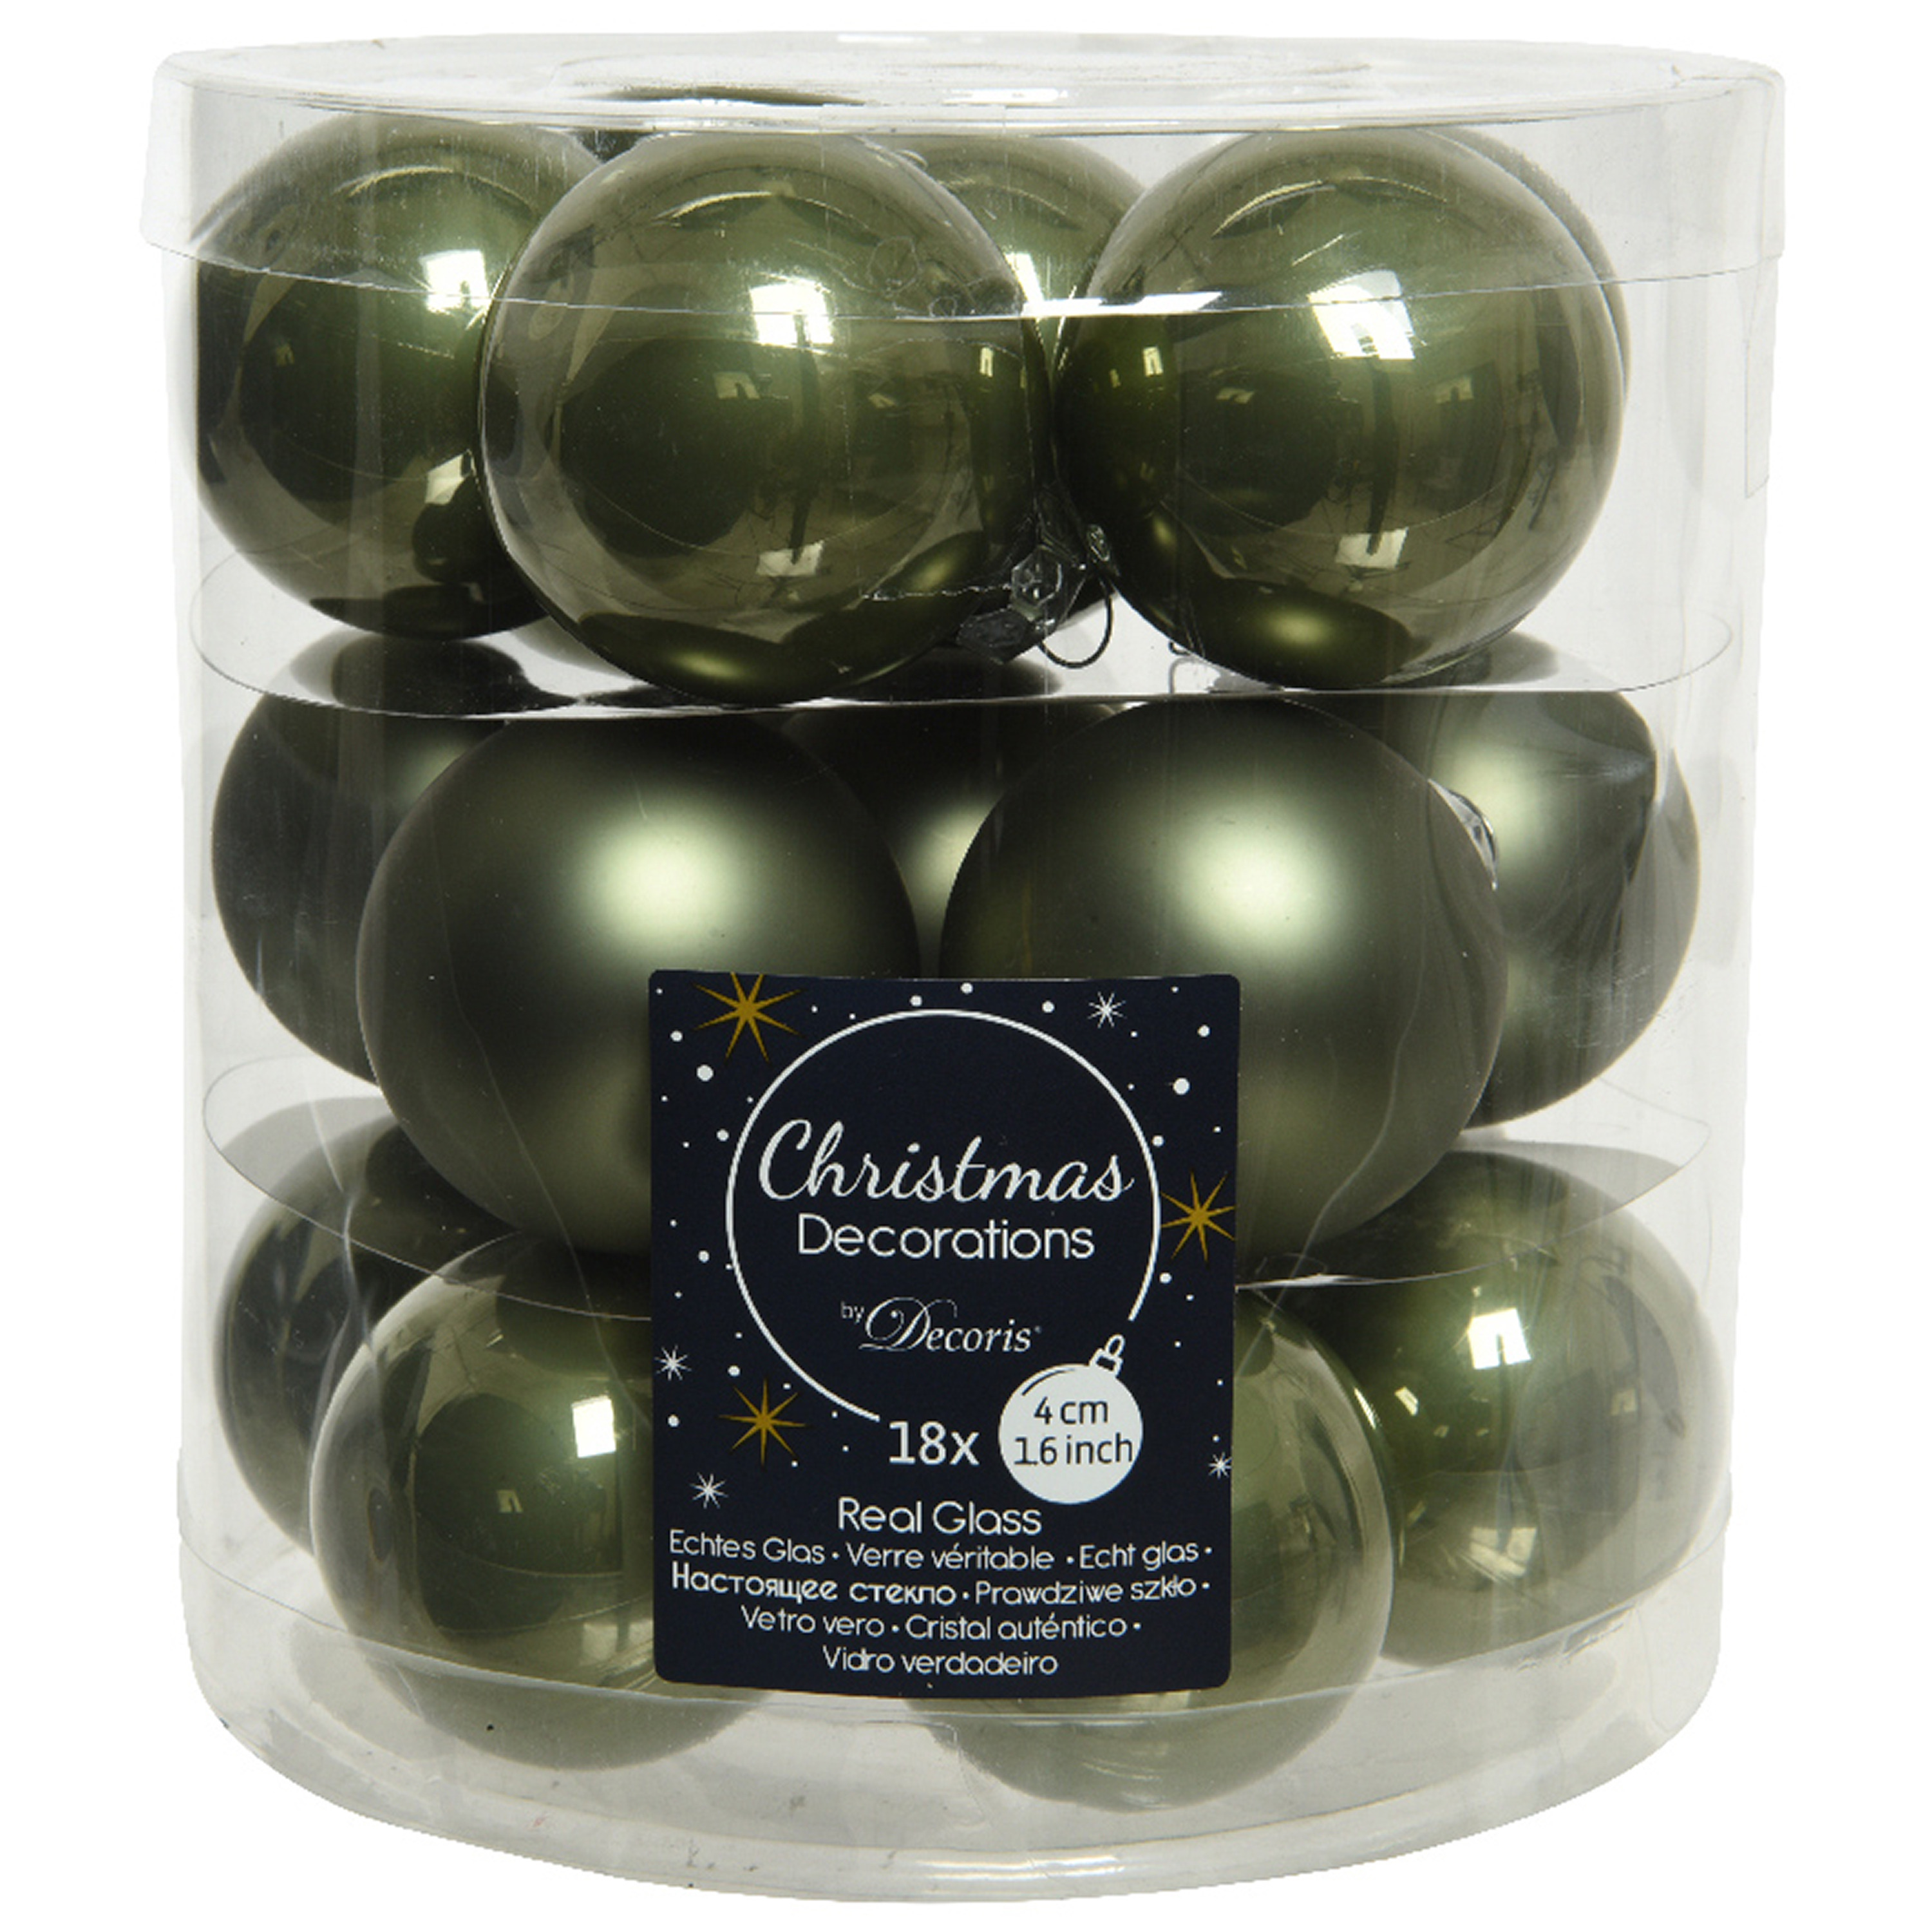 18x stuks kleine glazen kerstballen mos groen 4 cm mat-glans